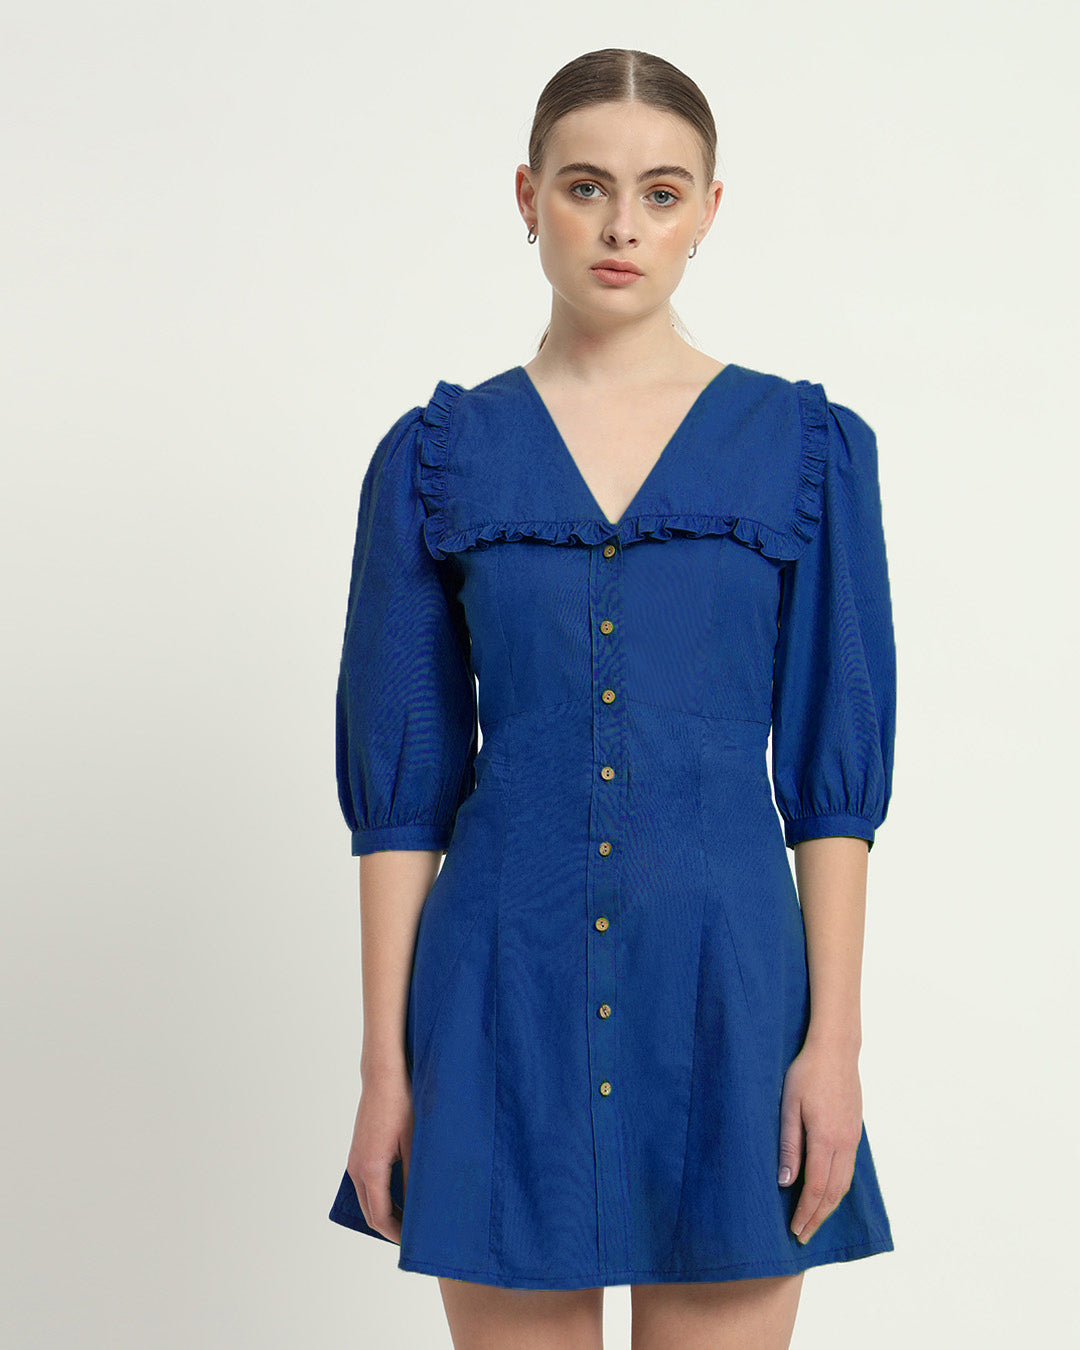 The Cobalt Isabela Cotton Dress